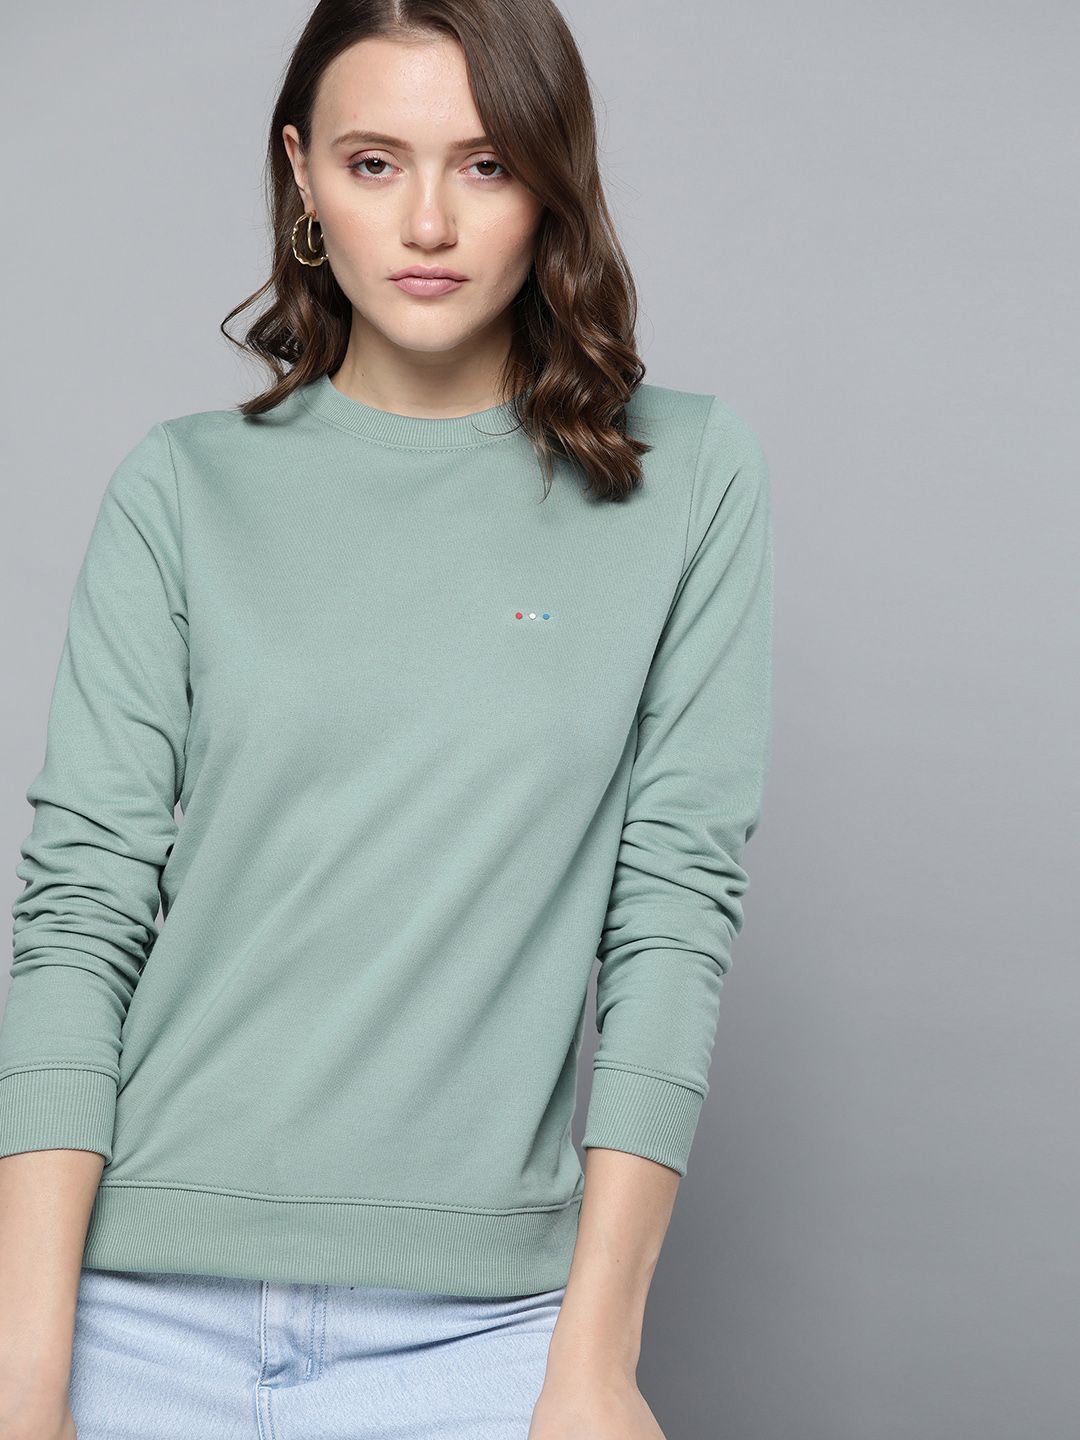 Harvard Women Sea Green Solid Pullover Sweatshirt Price in India